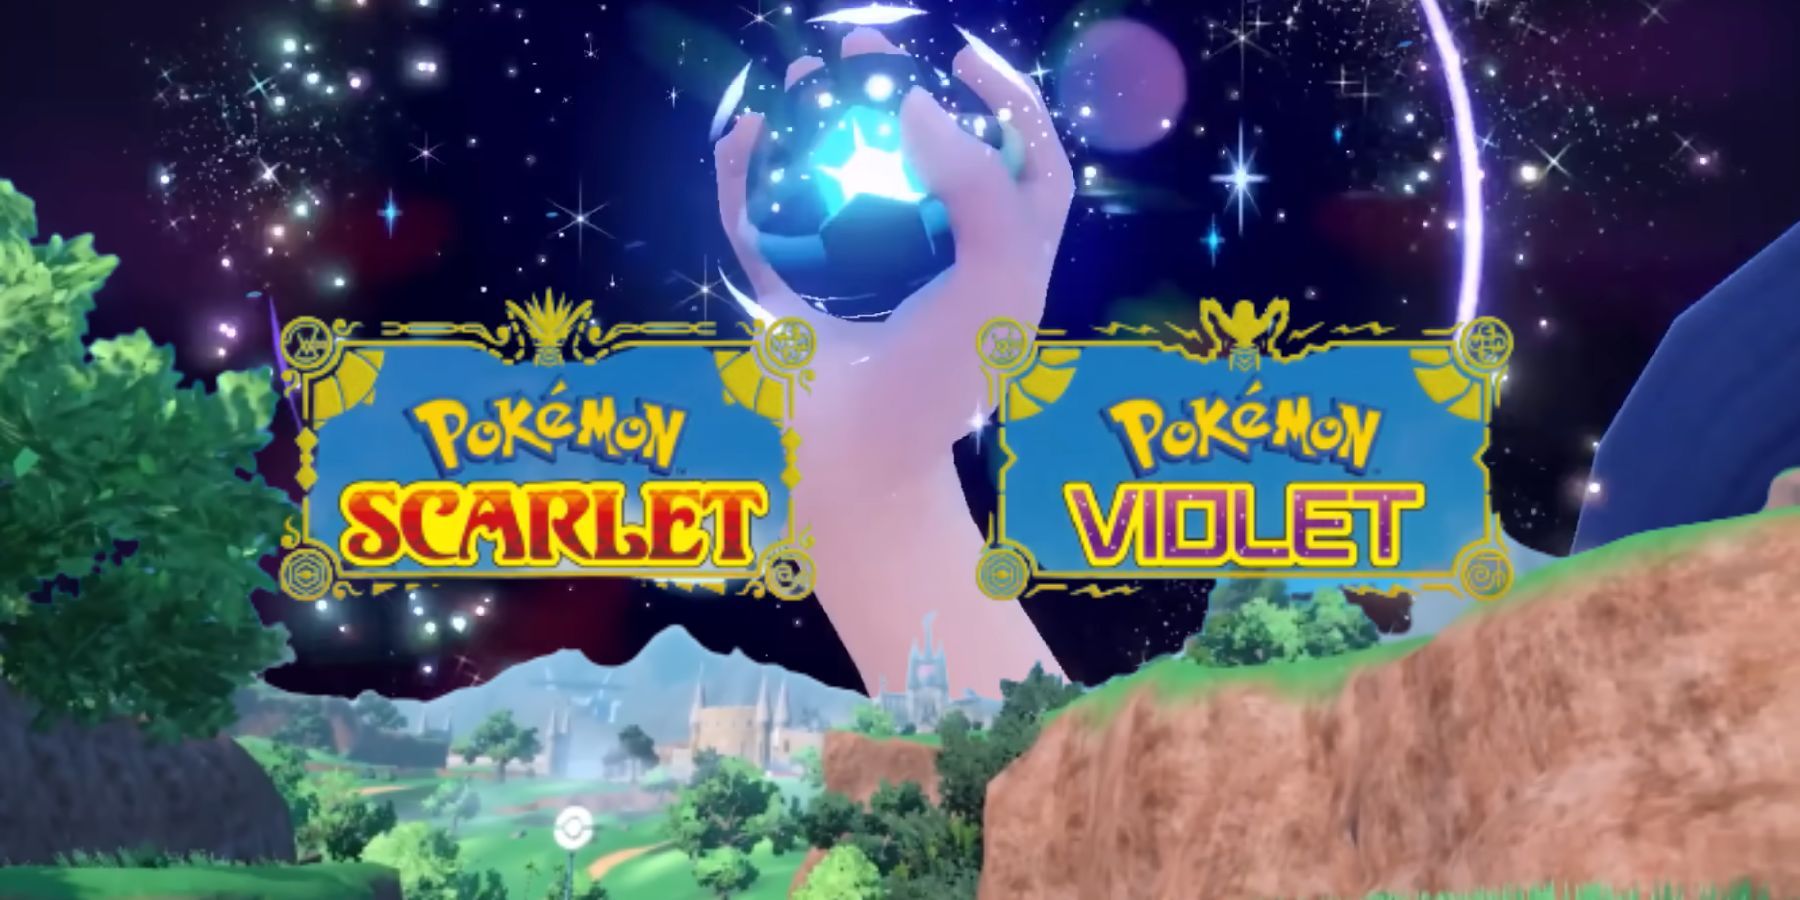 9 Cheats for Pokémon Violet